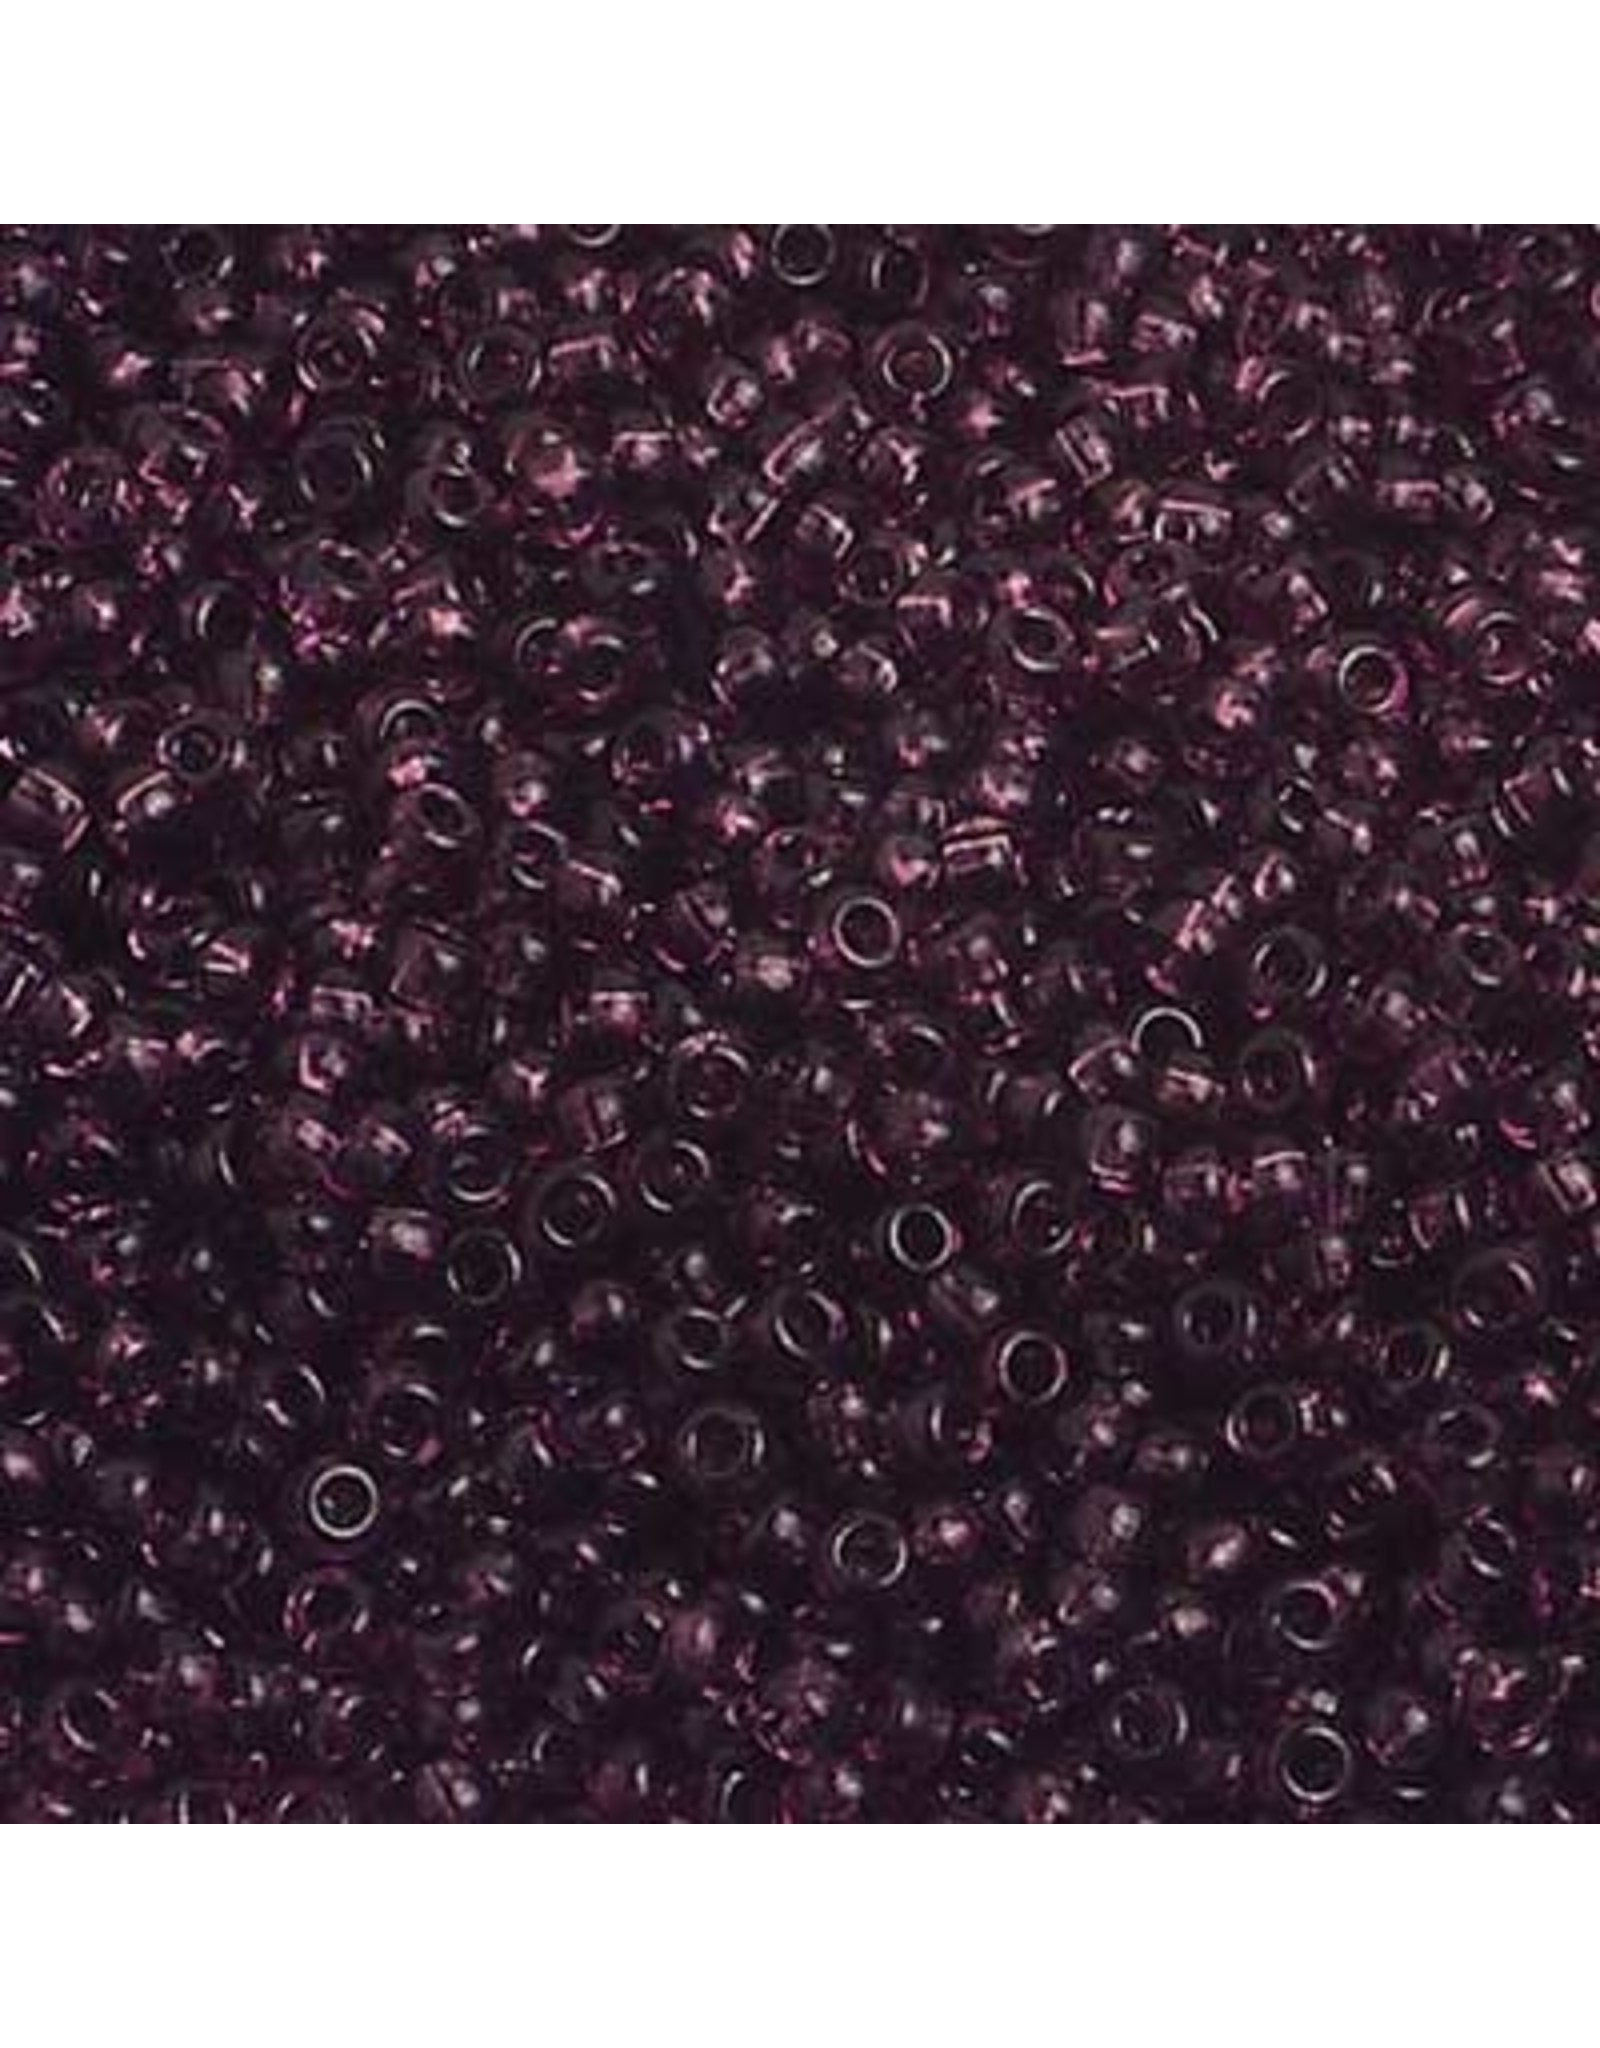 Czech 2319  10  Seed 125g Transparent Purple Amethyst